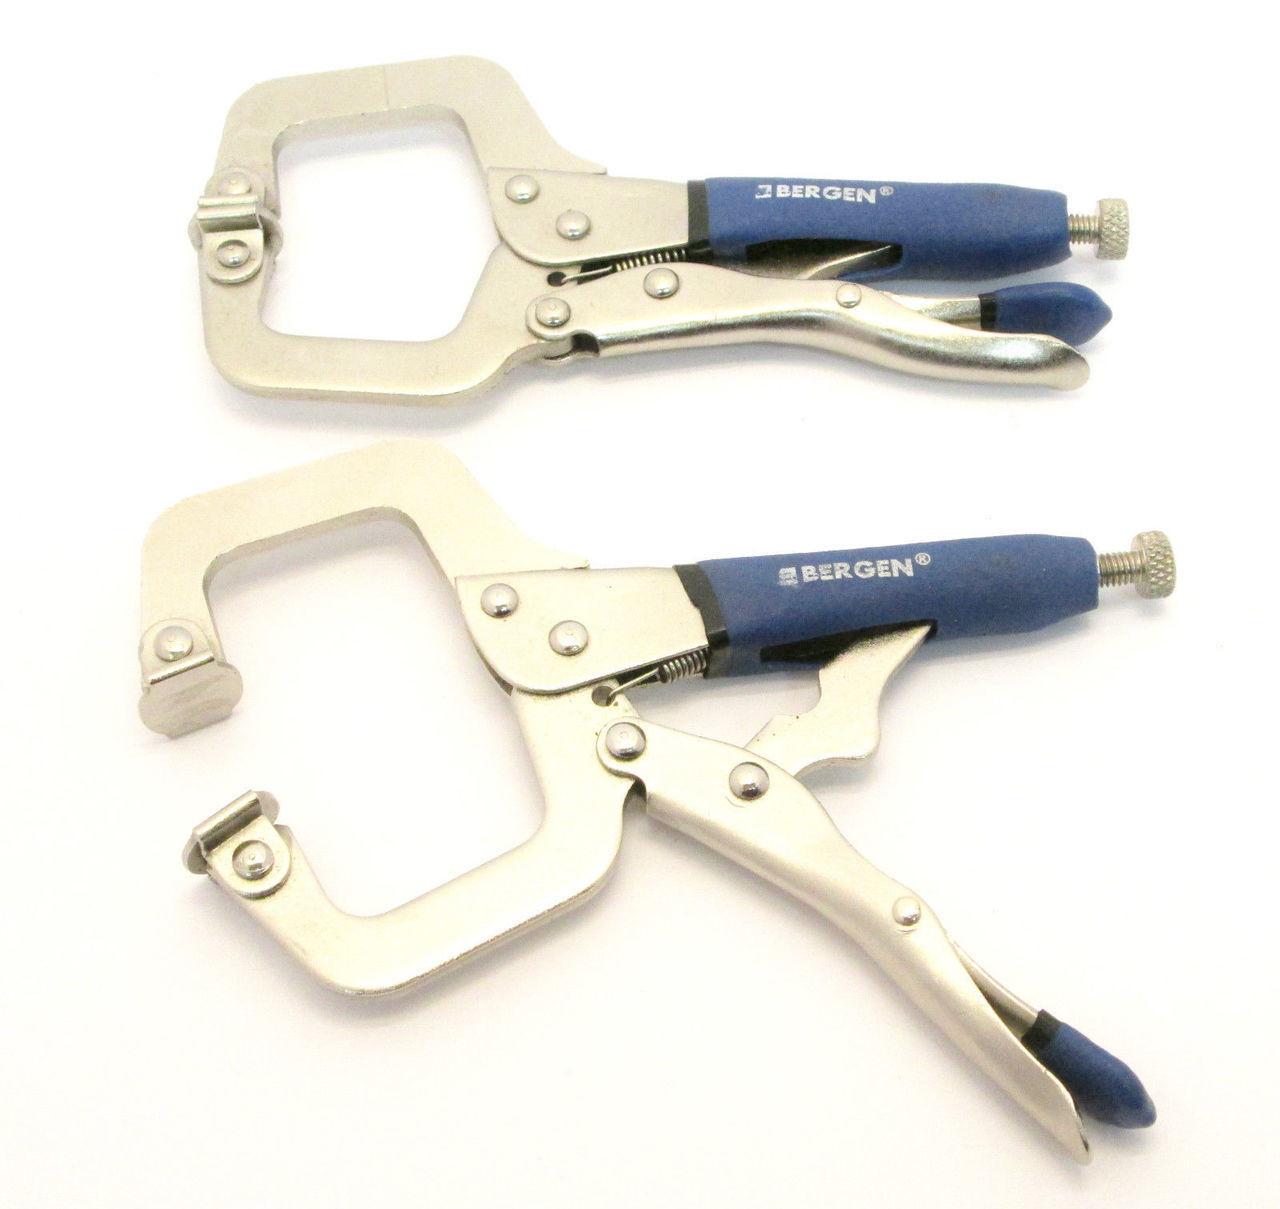  2pc 5" Mini Locking C-Clamp Plier Set Mole Grips Welding US PRO